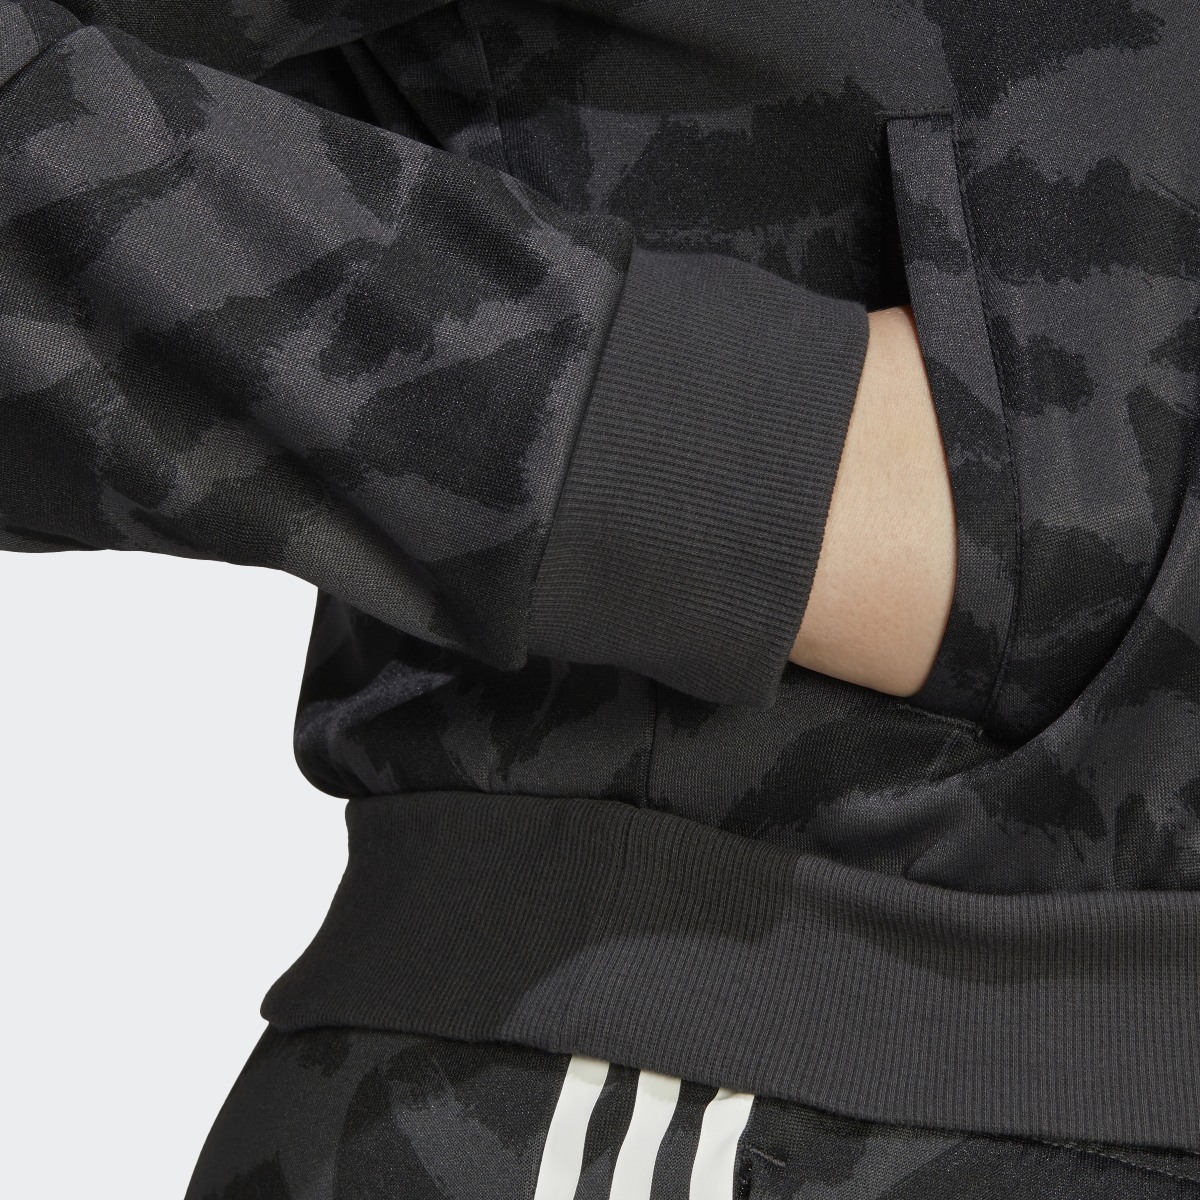 Adidas Tiro Suit Up Lifestyle Trainingsjacke – Große Größen. 7